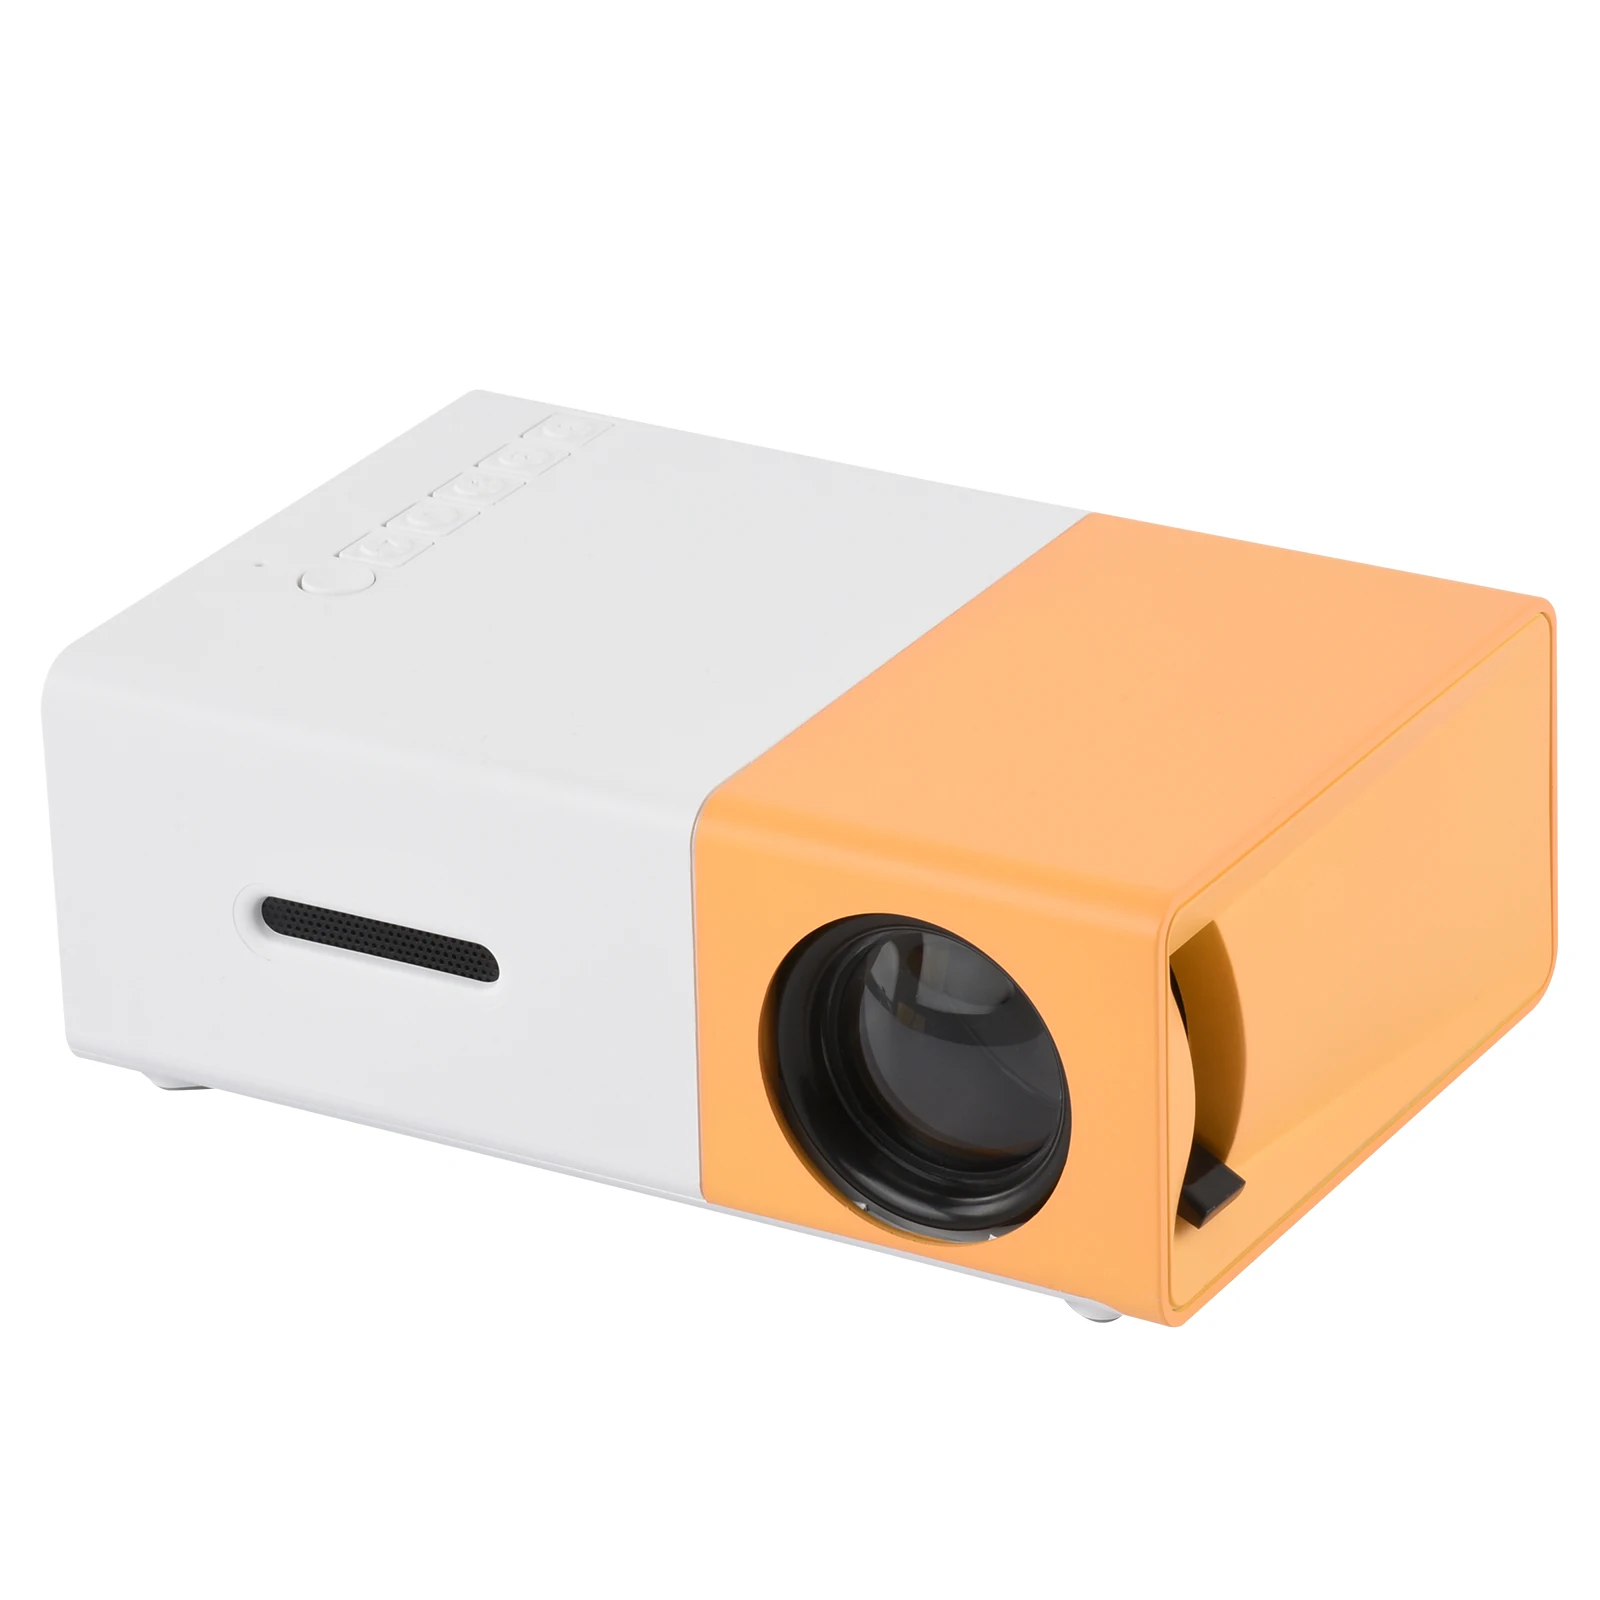 Мини-проектор YG300, проектор, HD Hdmi, совместимый с USB